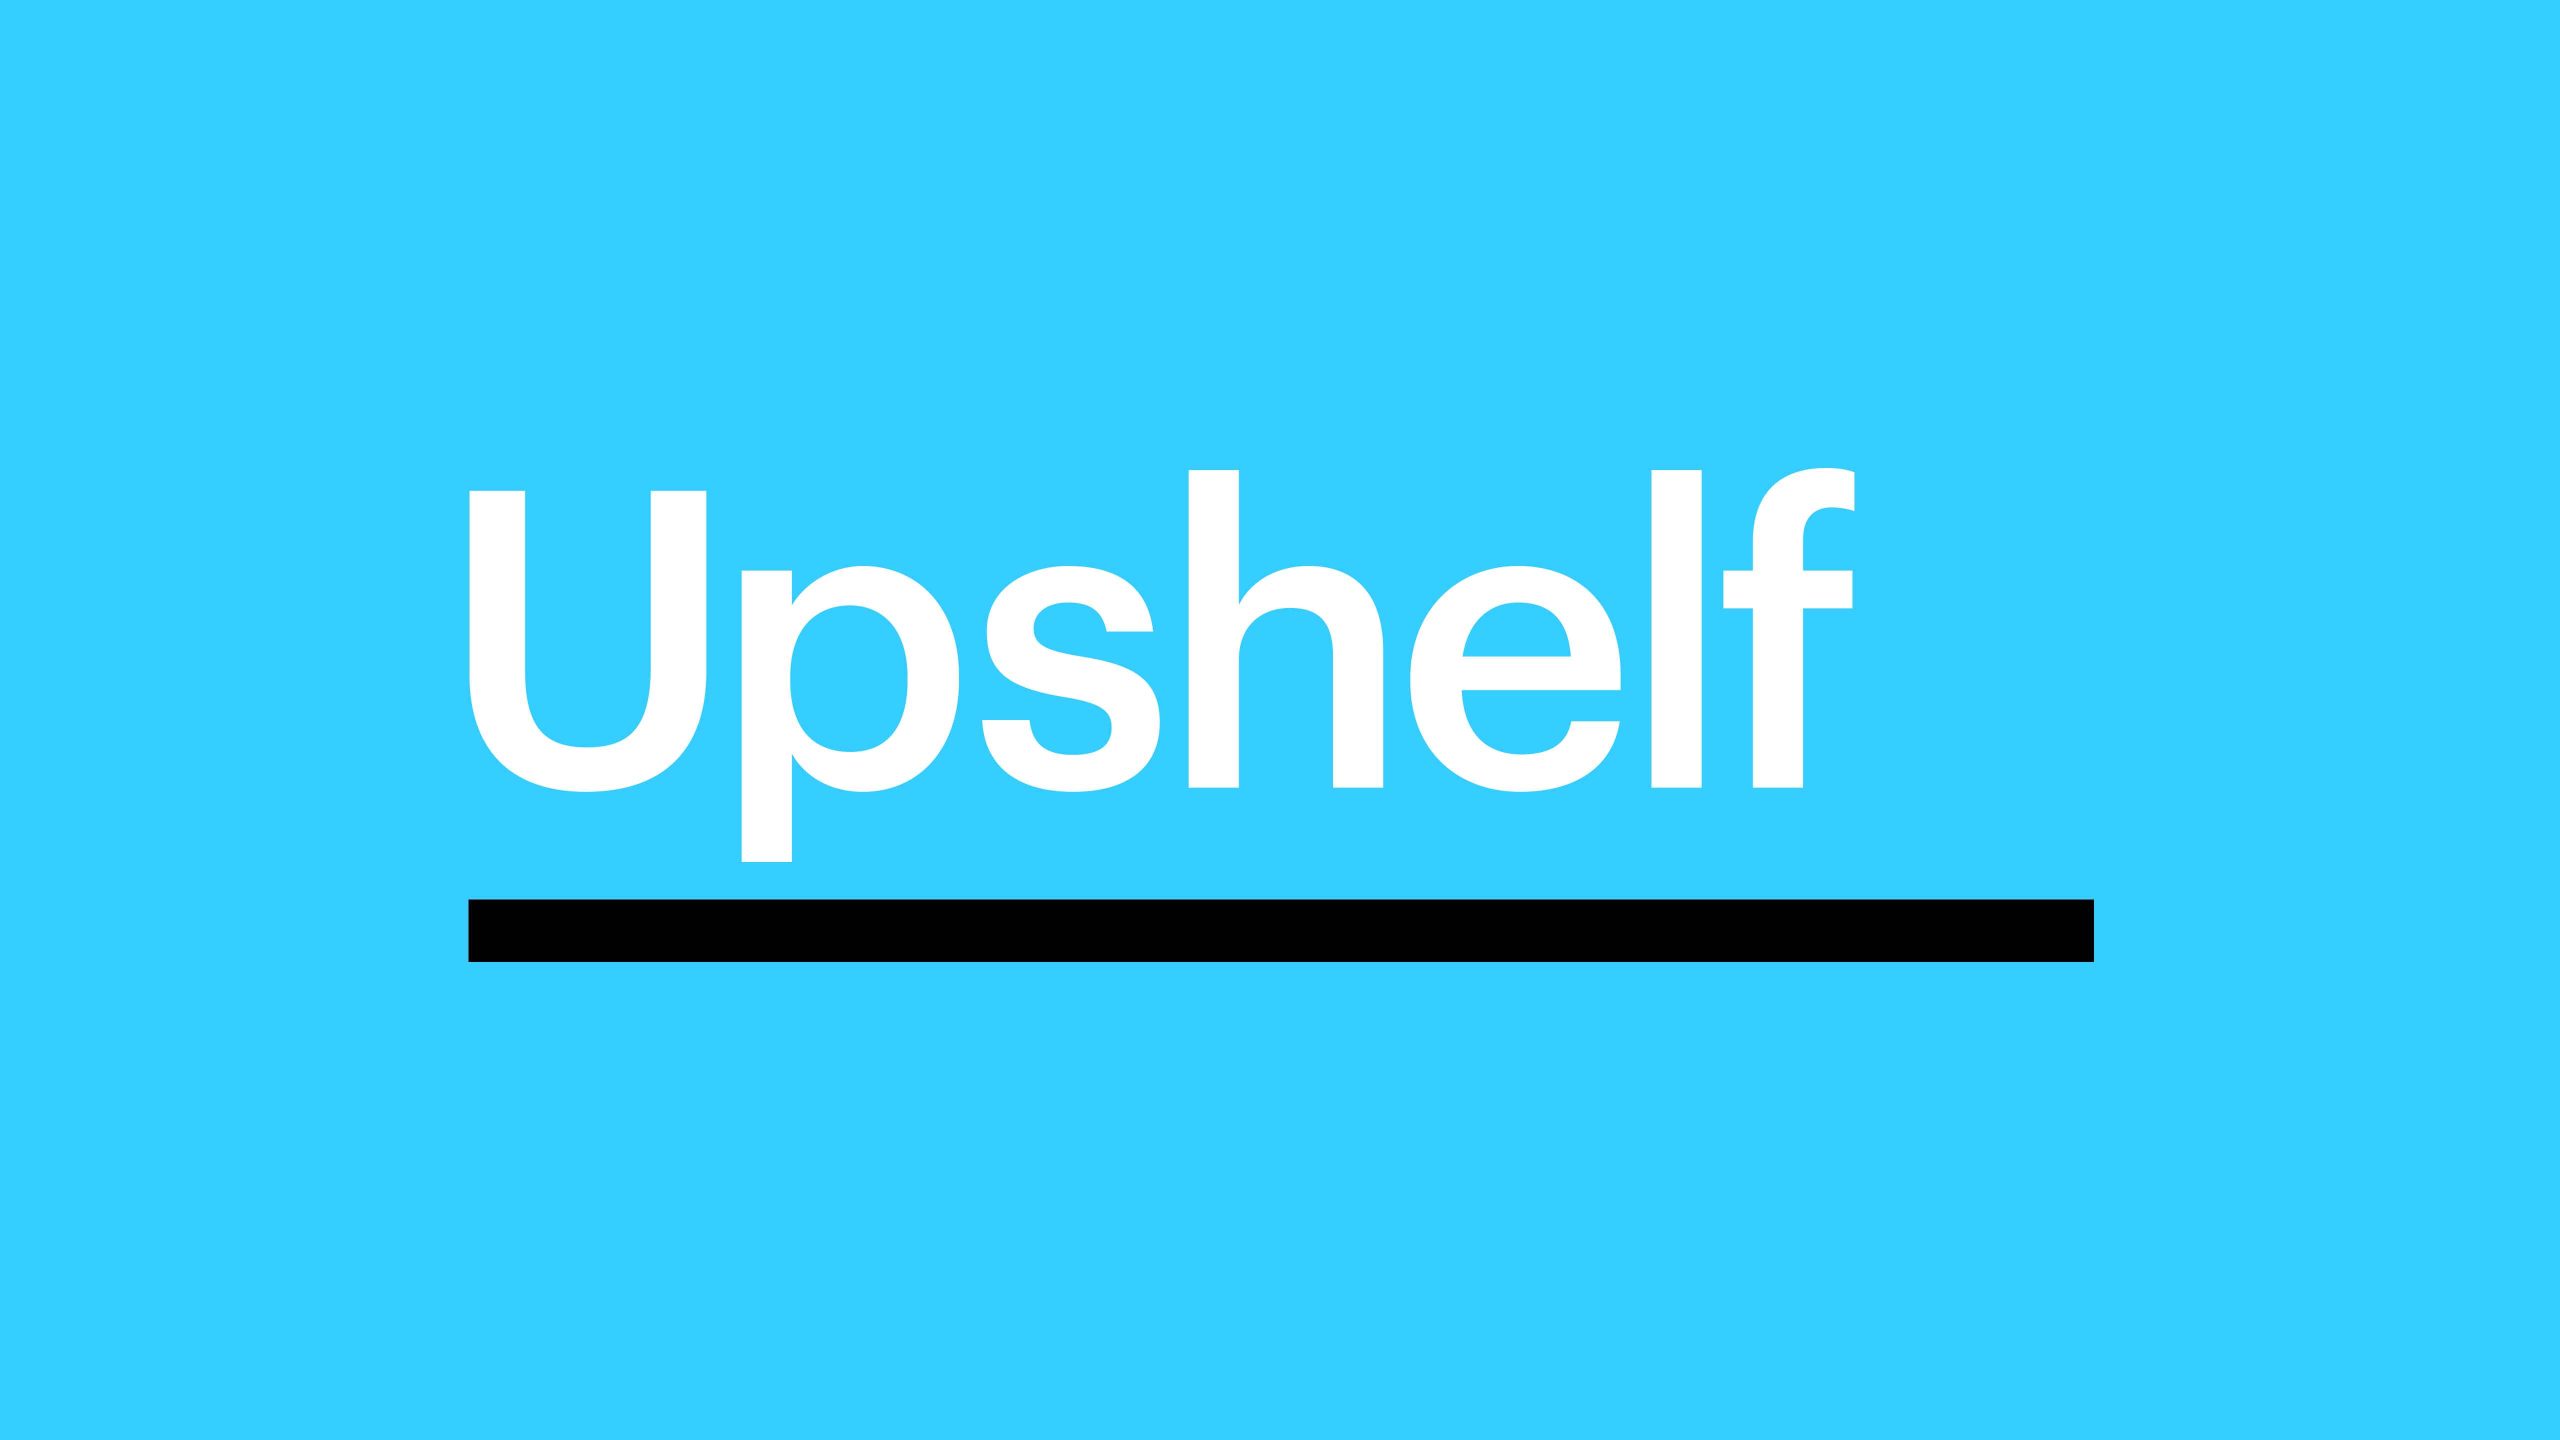 UPSHELF